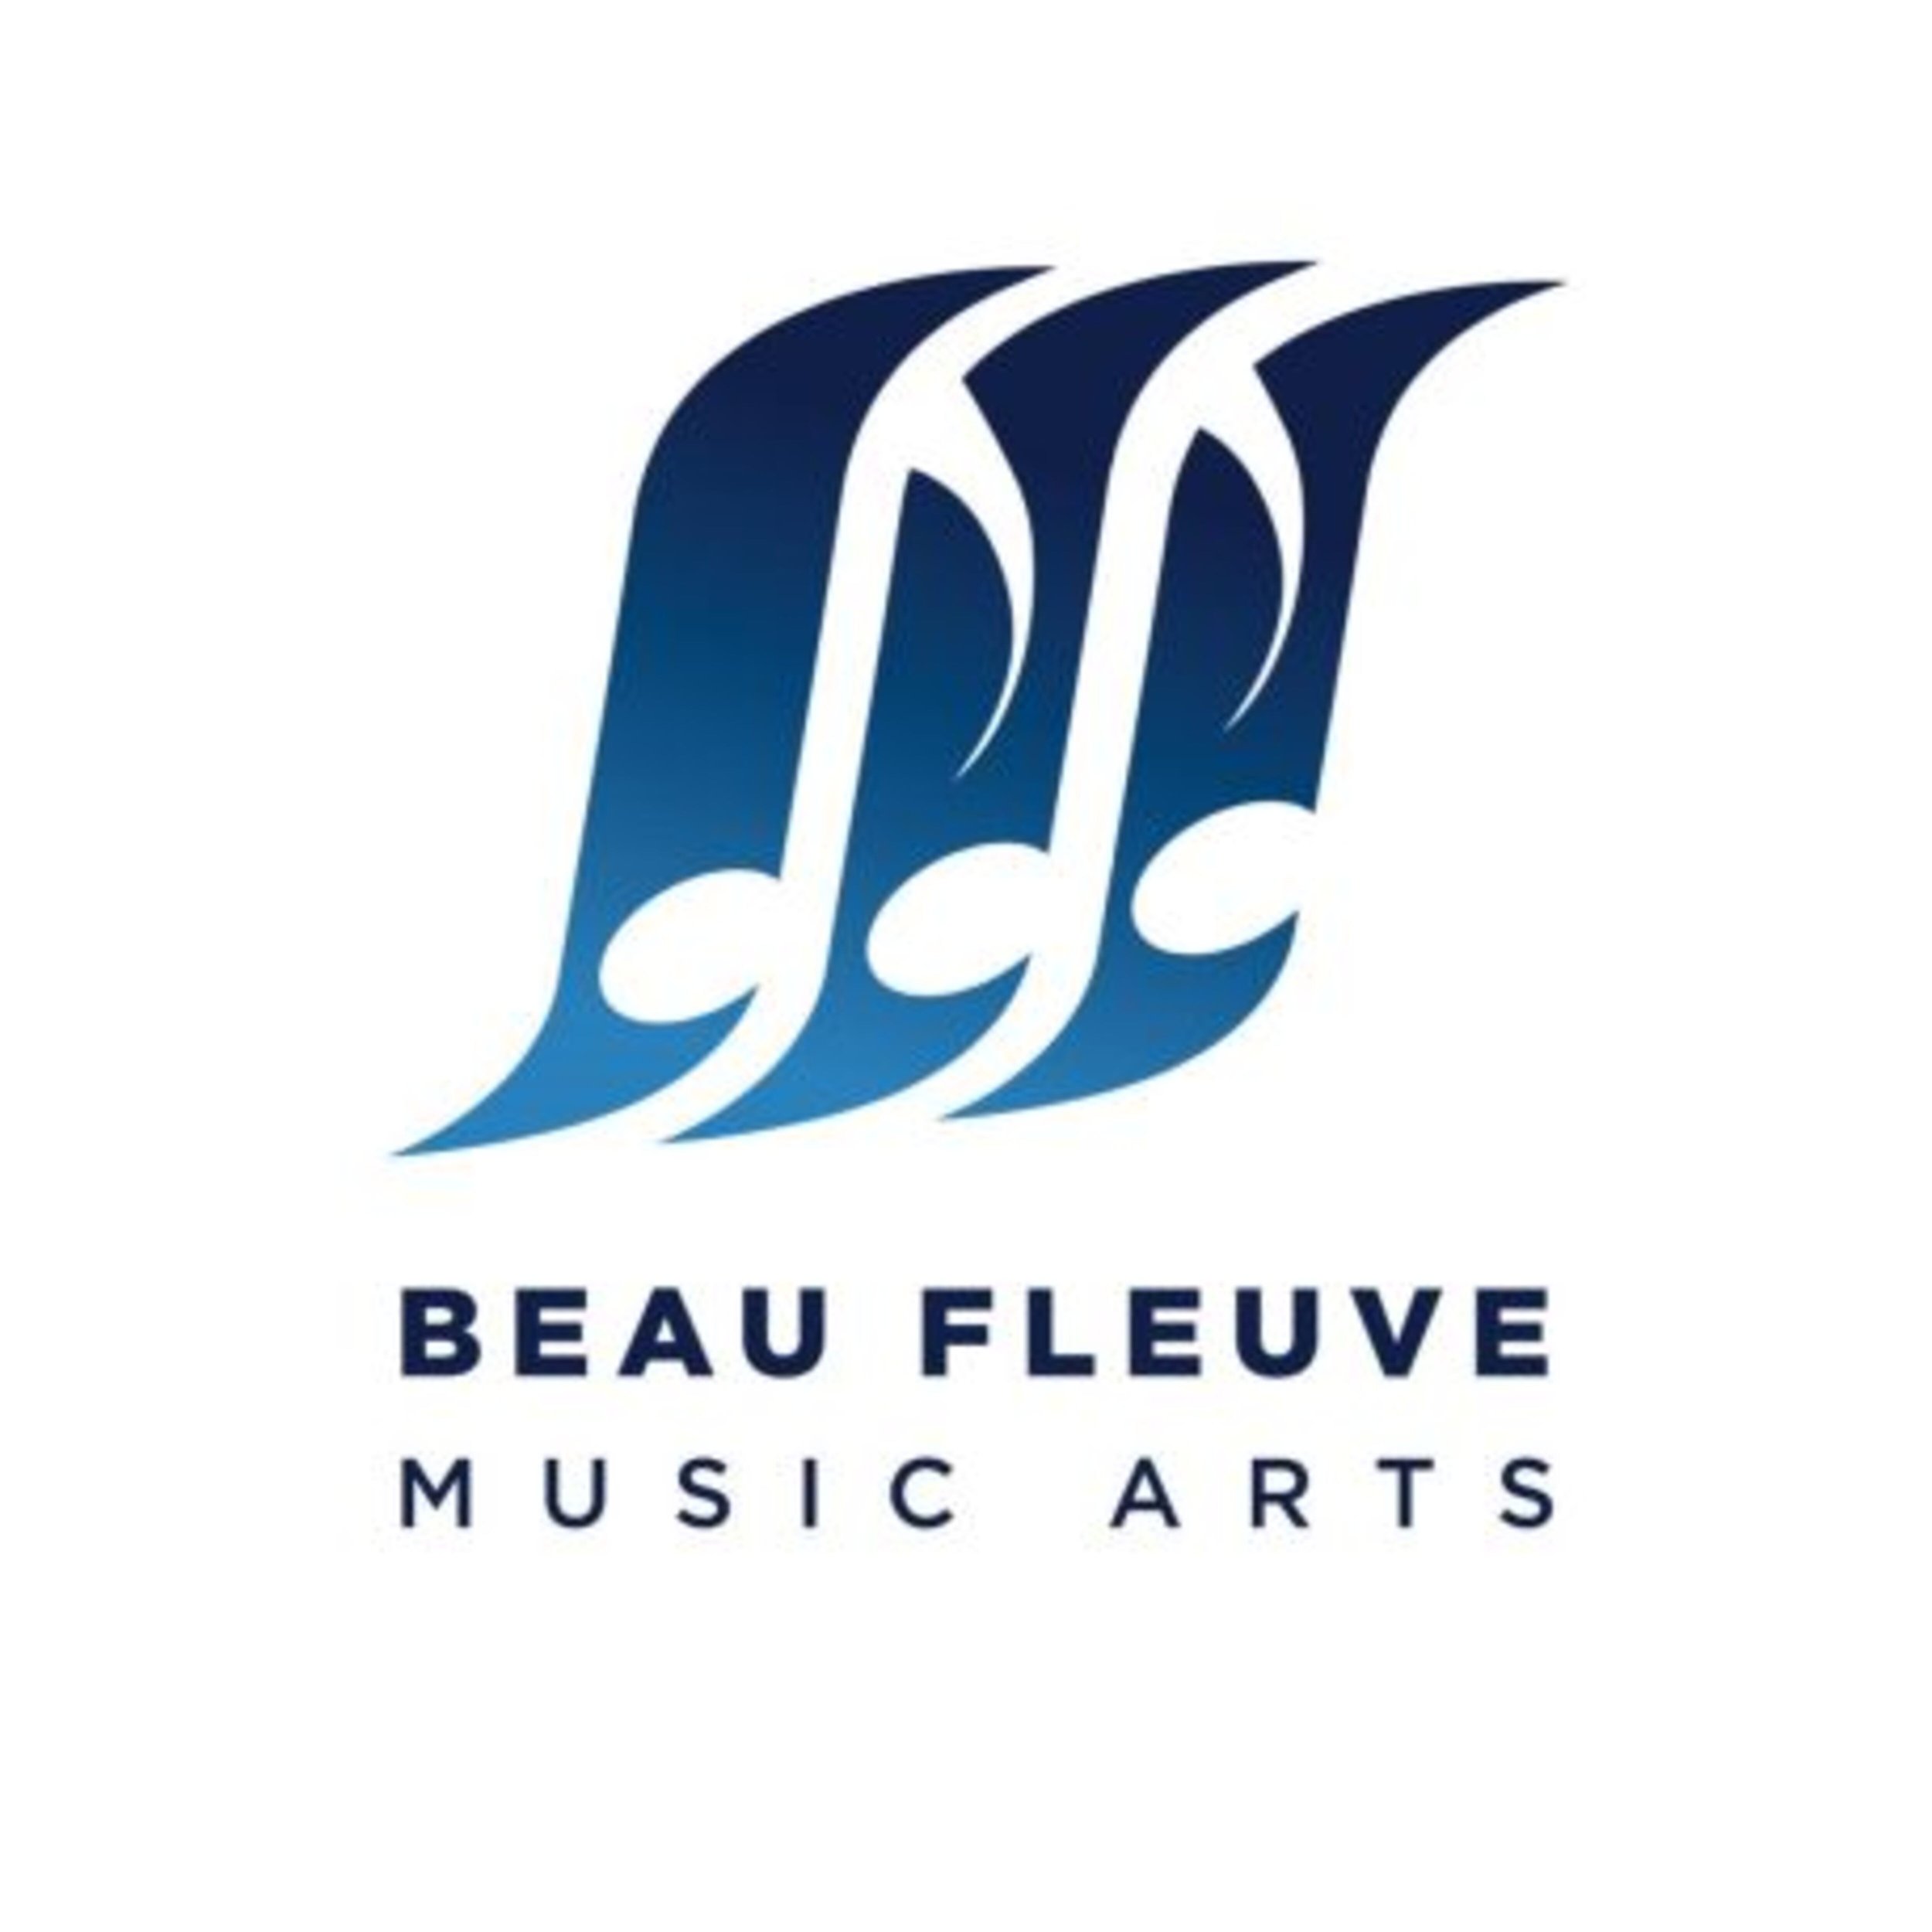 Beau Fleue Logo (1).jpeg